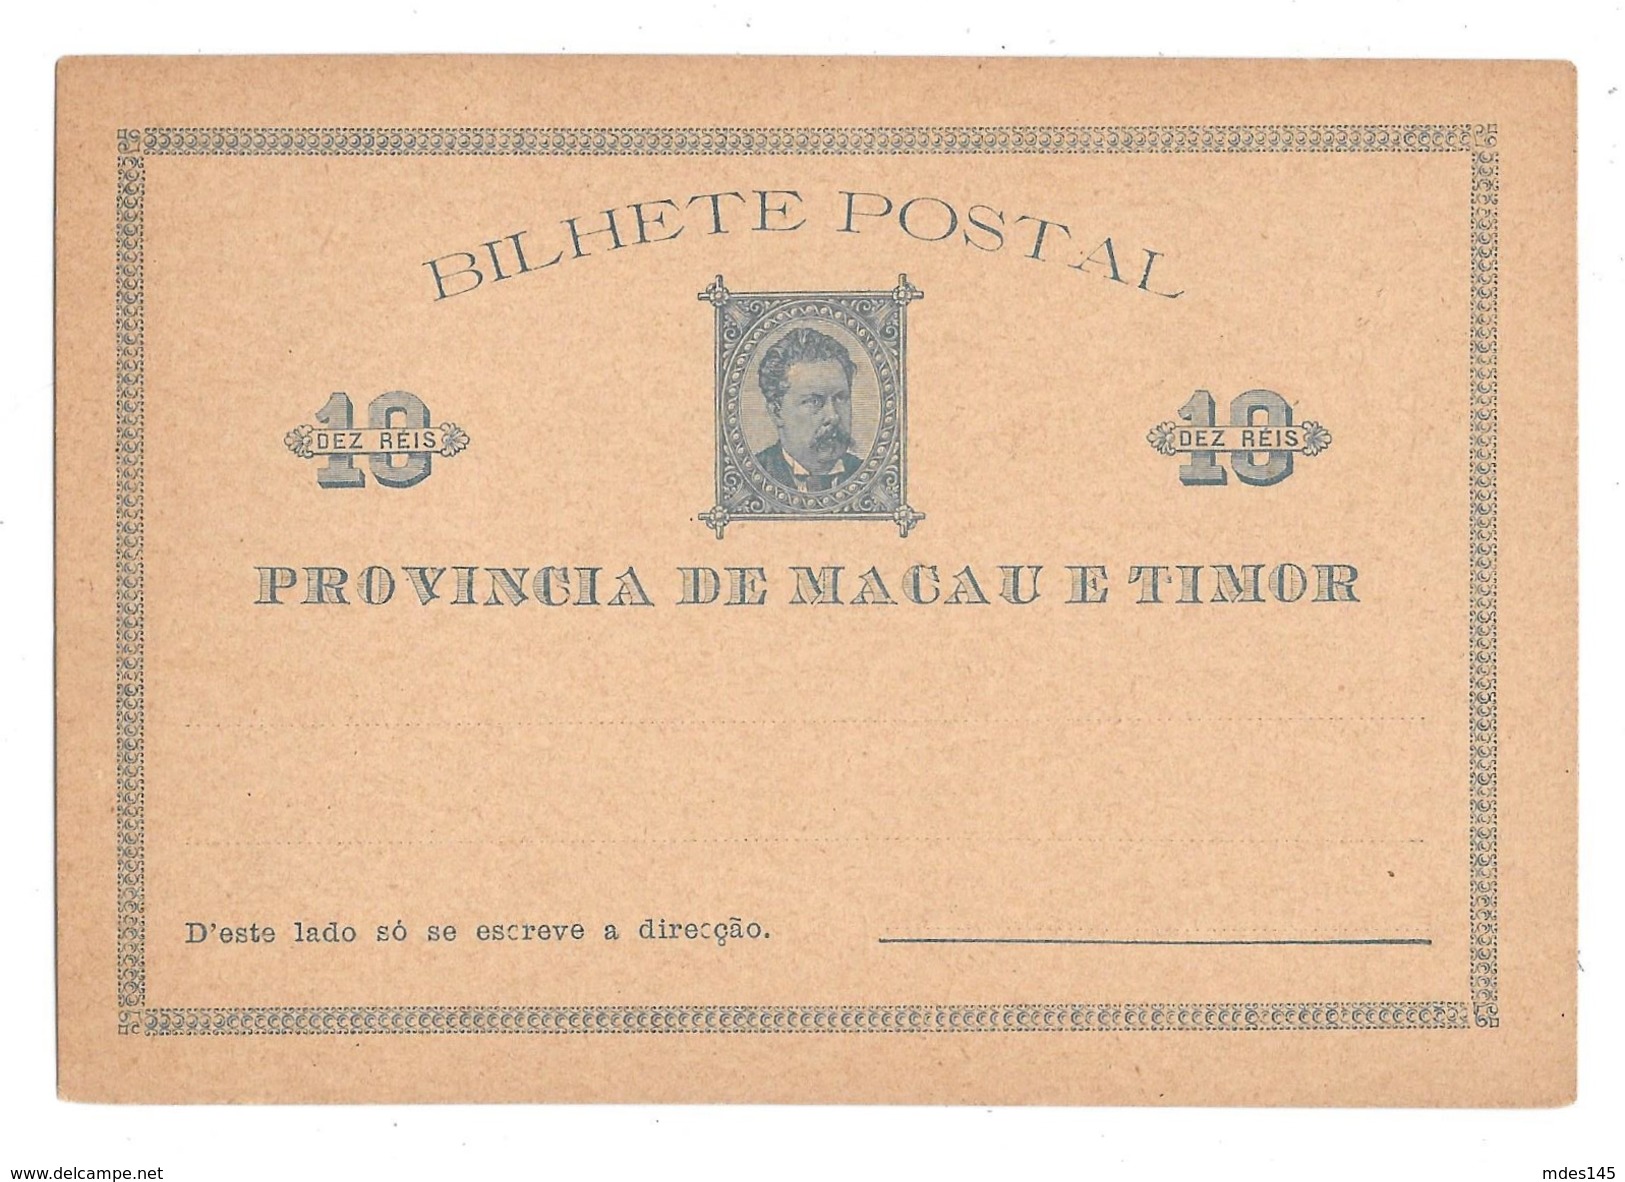 Macau Timor Macao Postal Stationery Card 10 Reis 1885 Unused - Covers & Documents